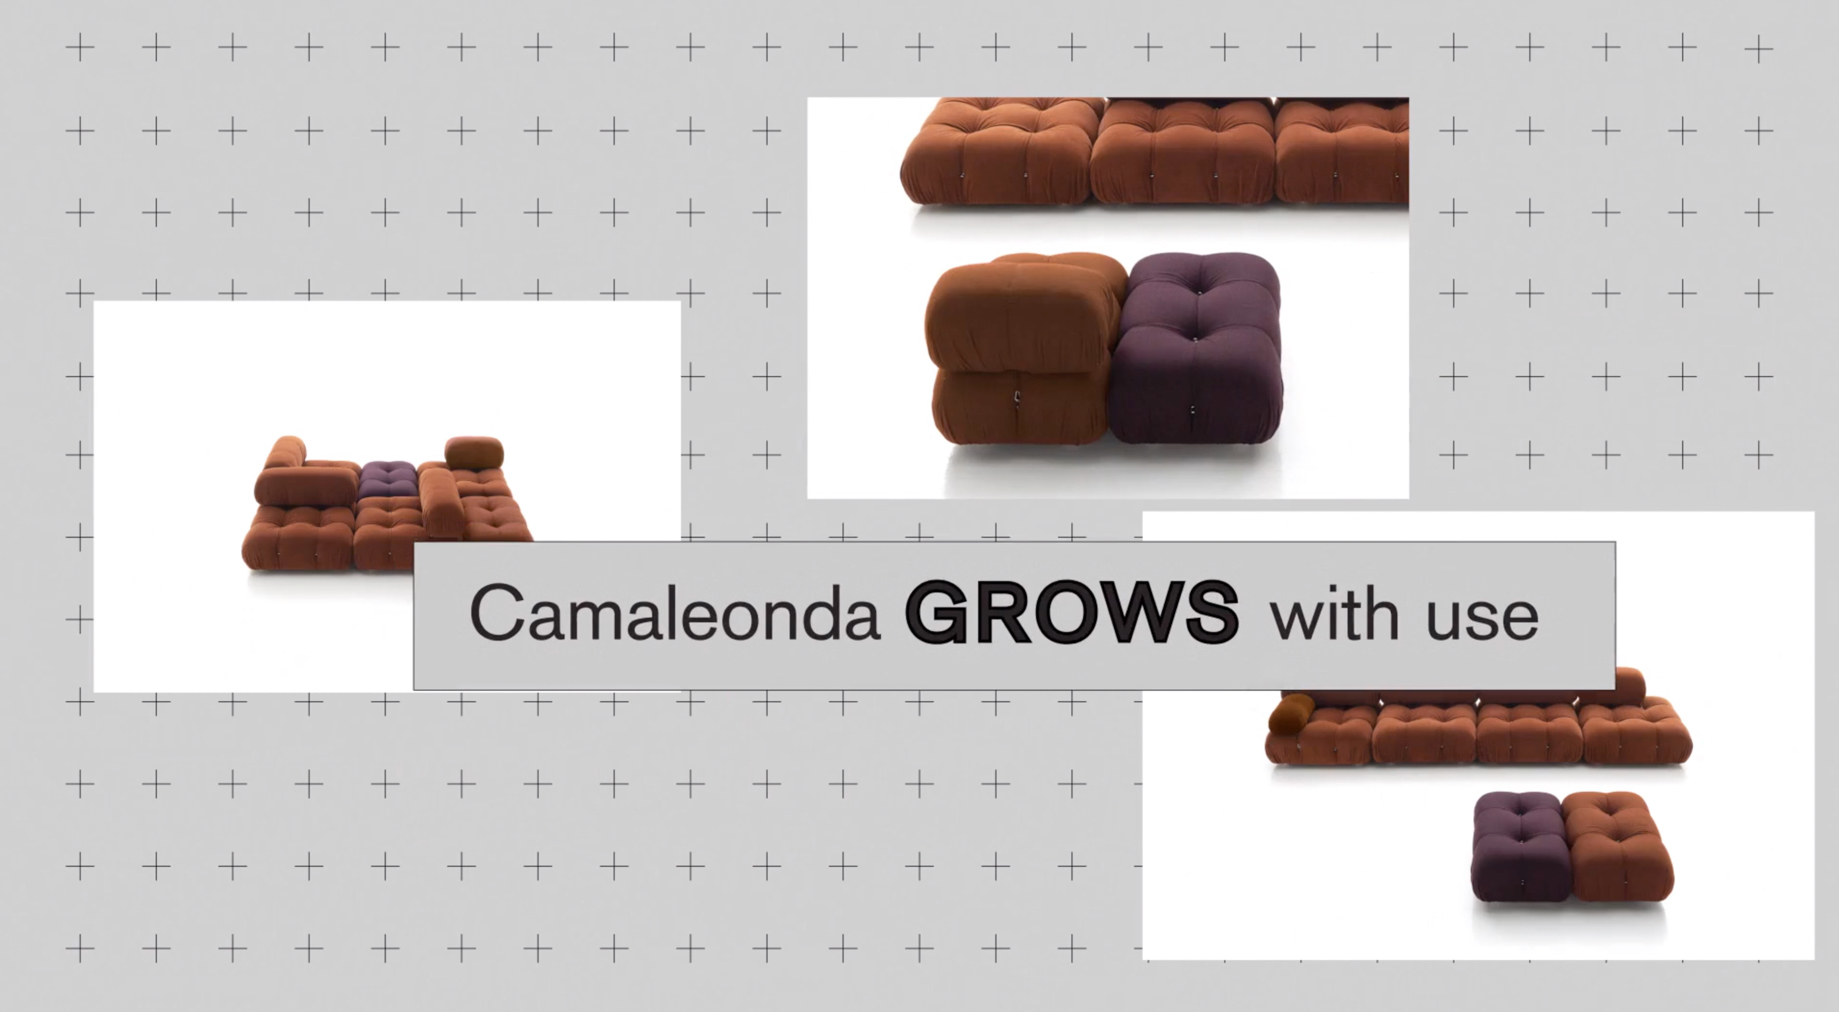 Camaleonda Classic Sofa Collection B&B Italia - Mario Bellini - Camaleonda Grows With Use